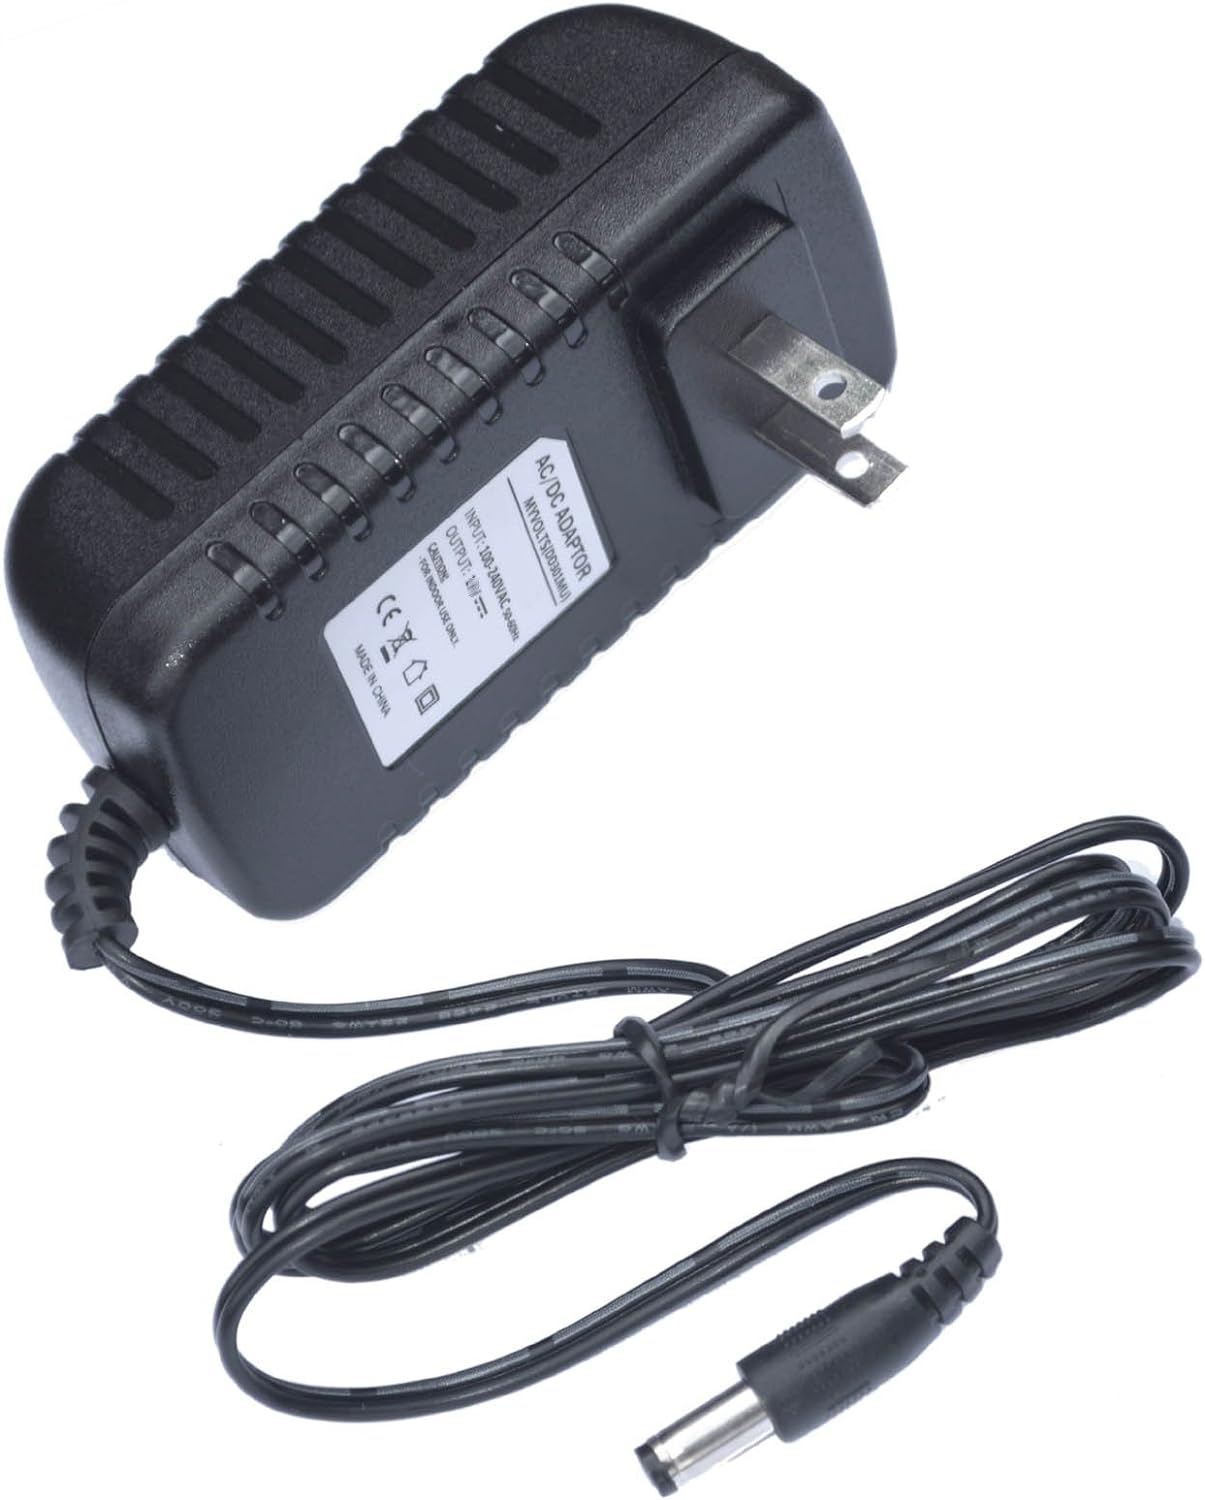 Adapter for Black & Decker Drill 7.2 Volt Battery Charger 7.2V dc 418337-18  B&D